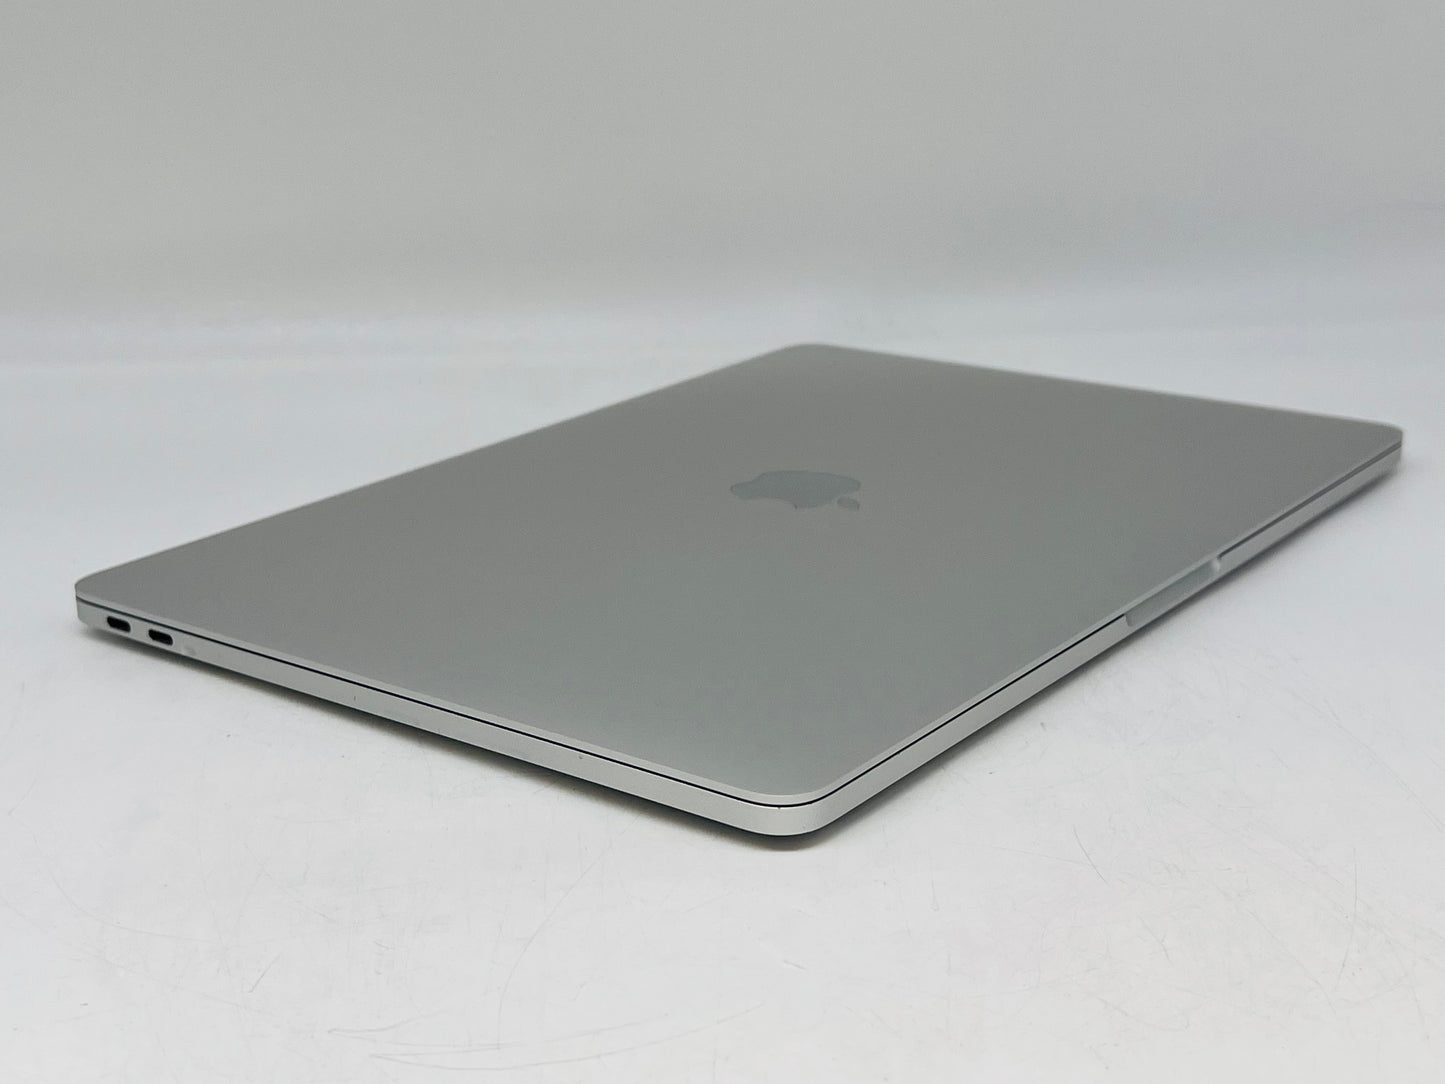 #2 Apple 2017 MacBook Pro 2.3GHz Dual-Core i5 16GB RAM 128GB SSD Space Gray (A)